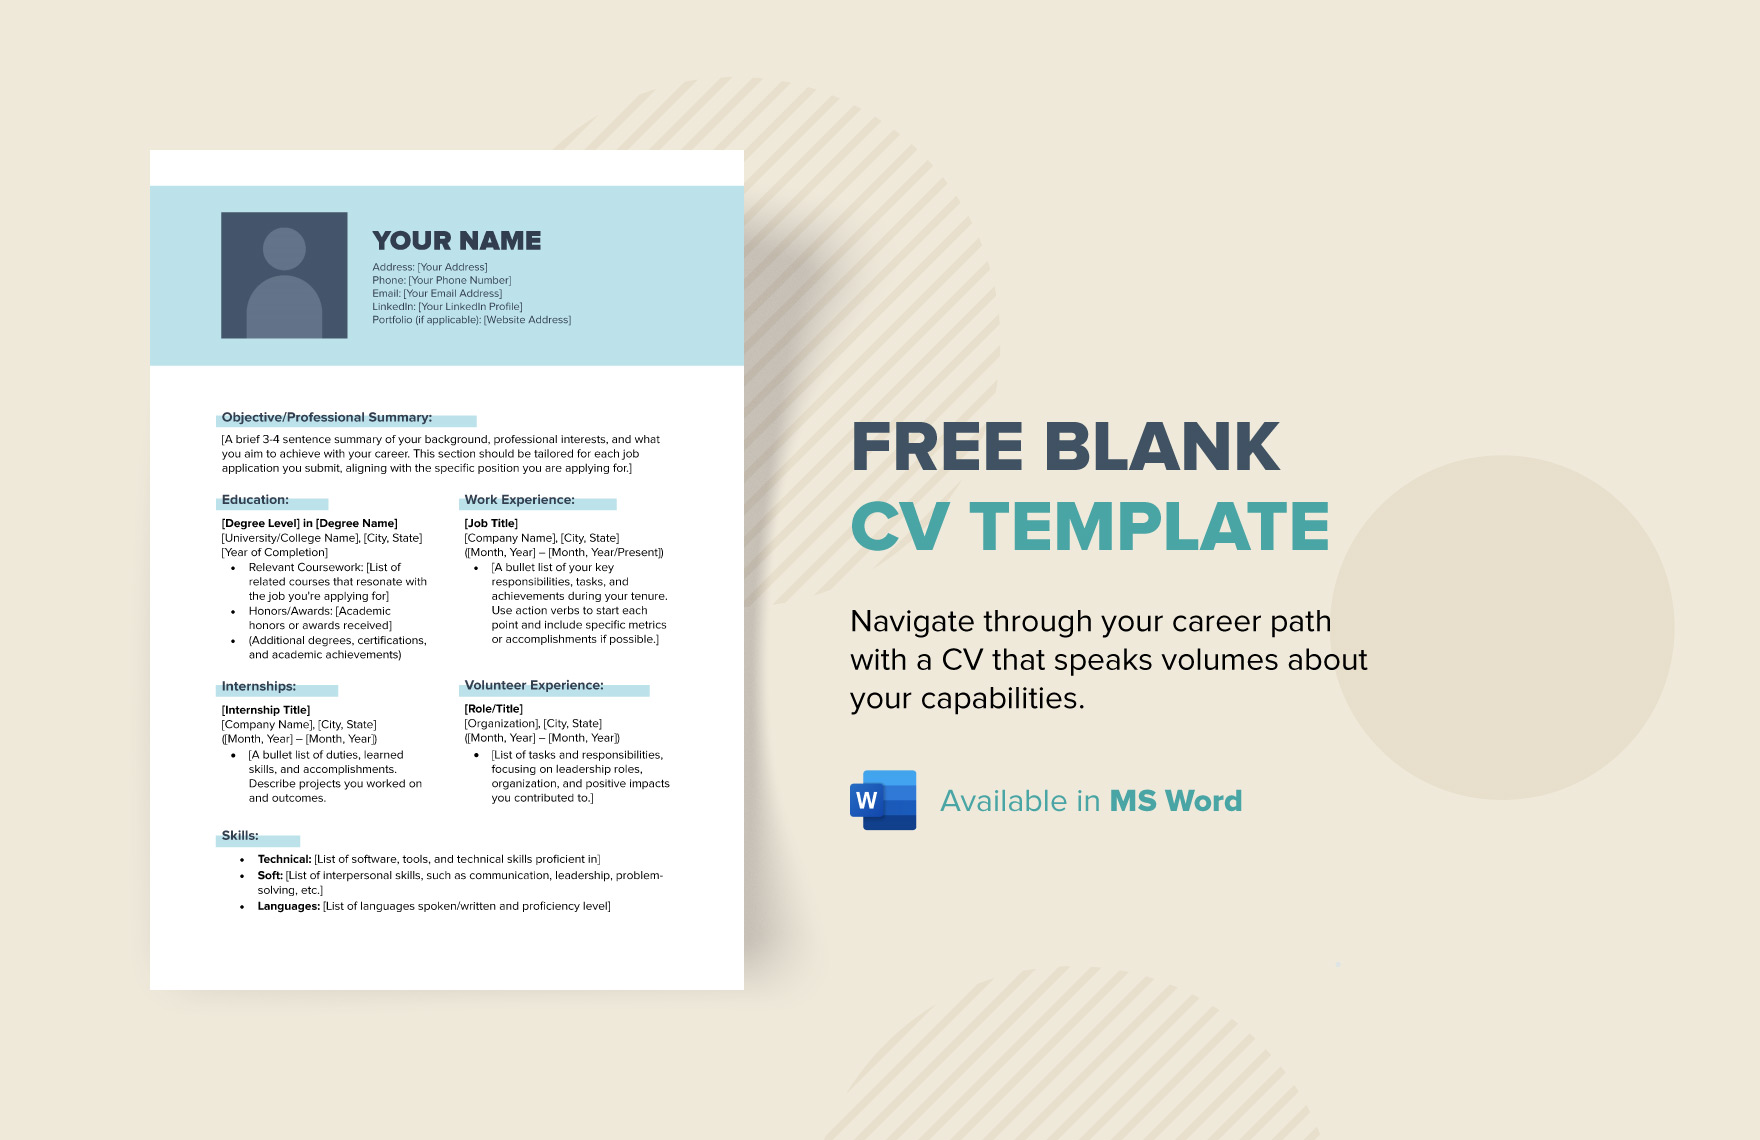 Free Blank CV Template